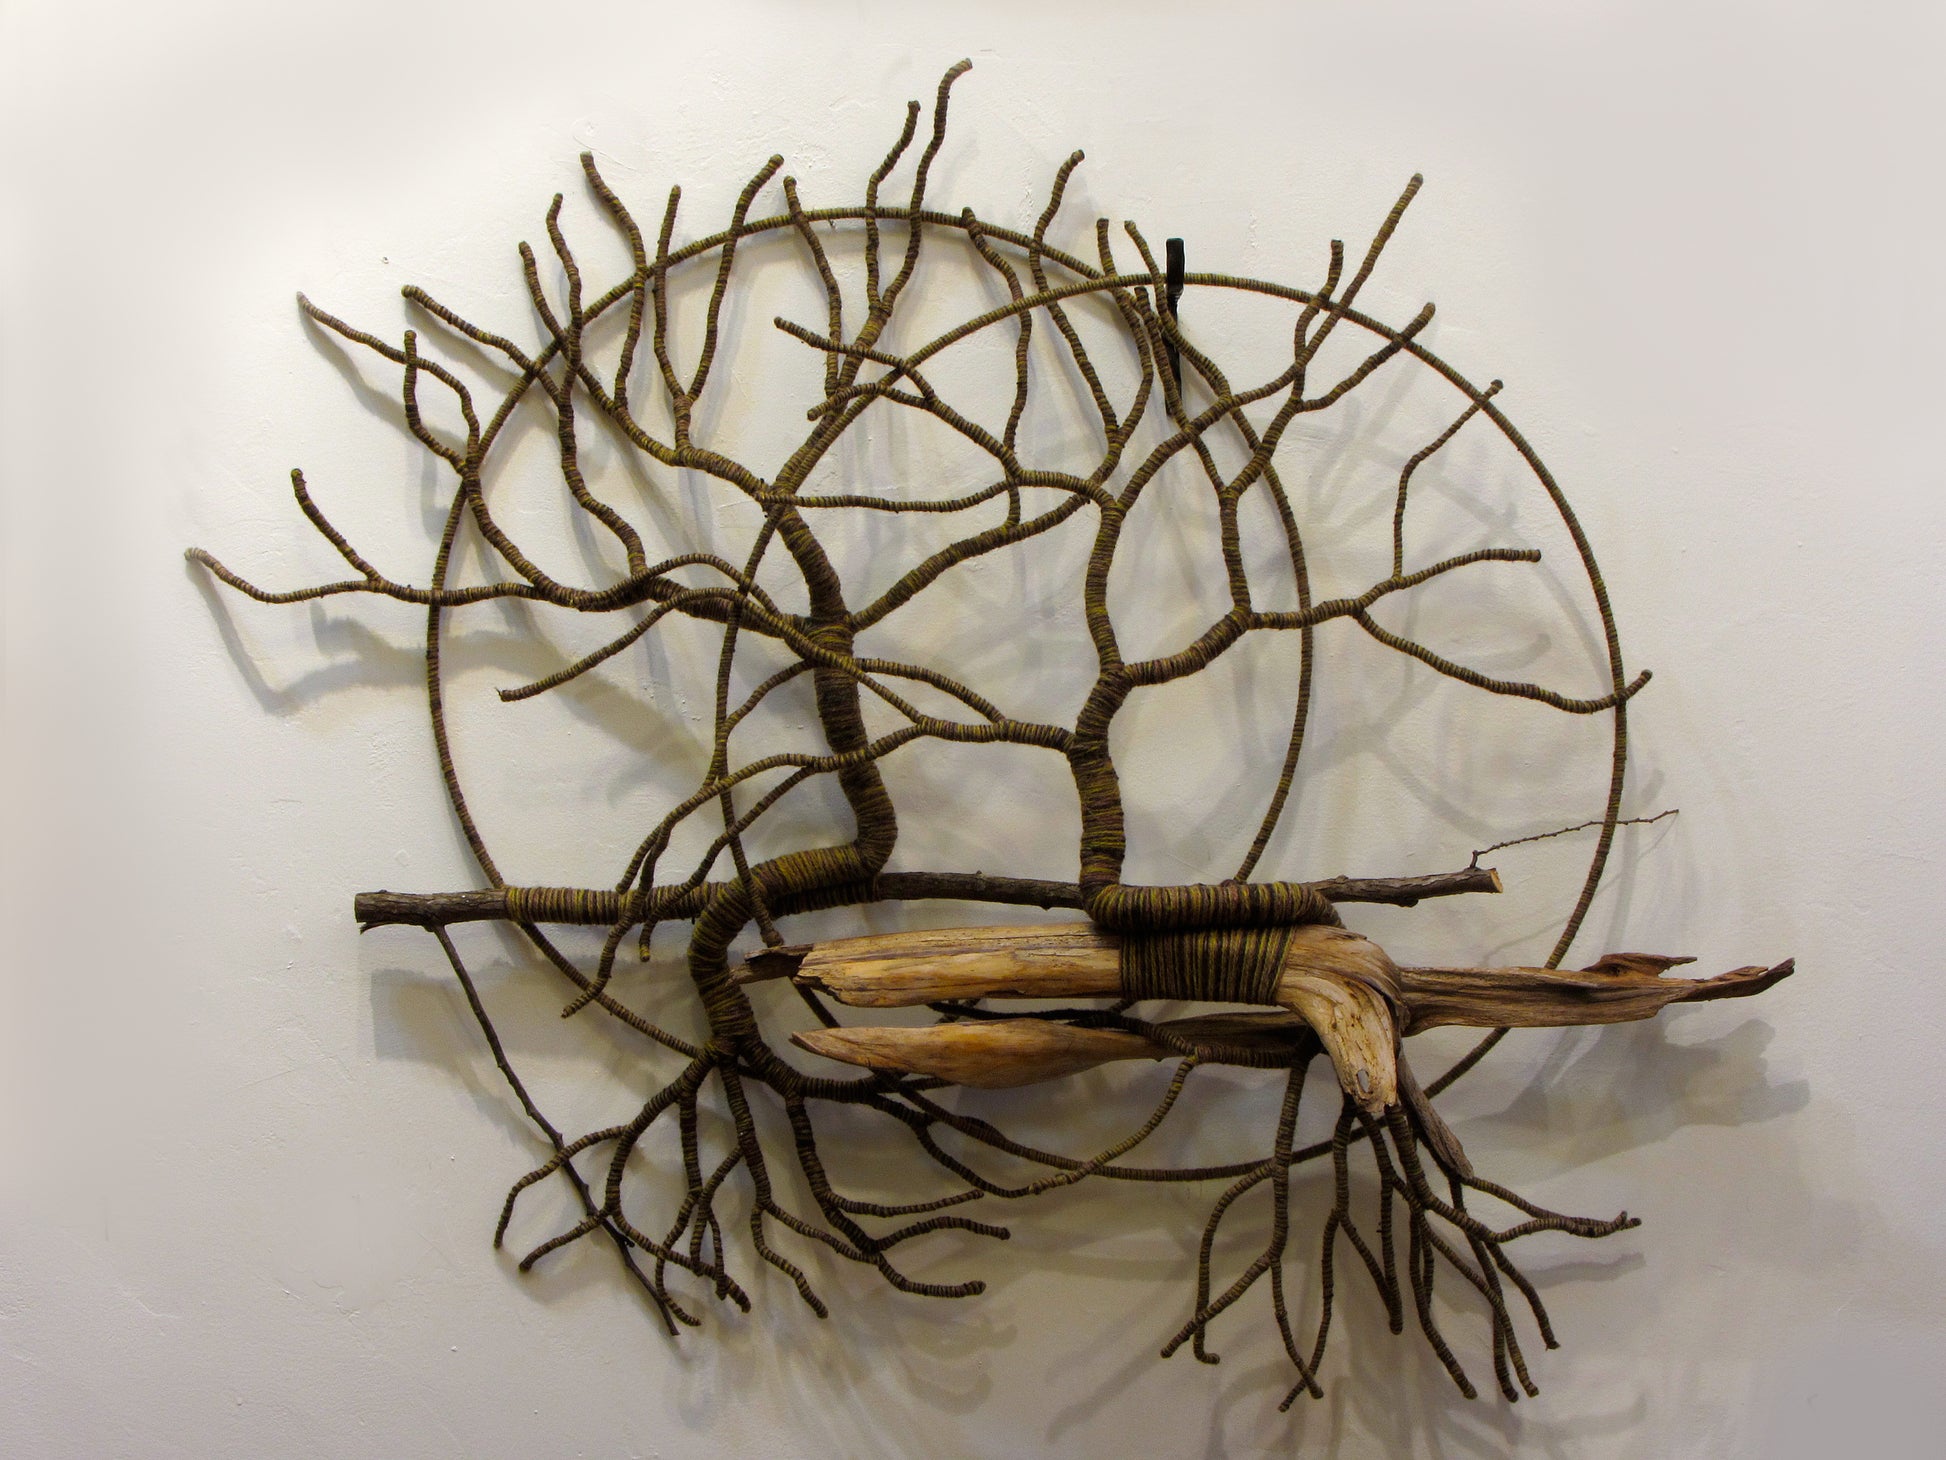 Tree sculpture, tree of life sculpture, tree of life fiber art, Wendy Carpenter art, Boho chic fresh ideas